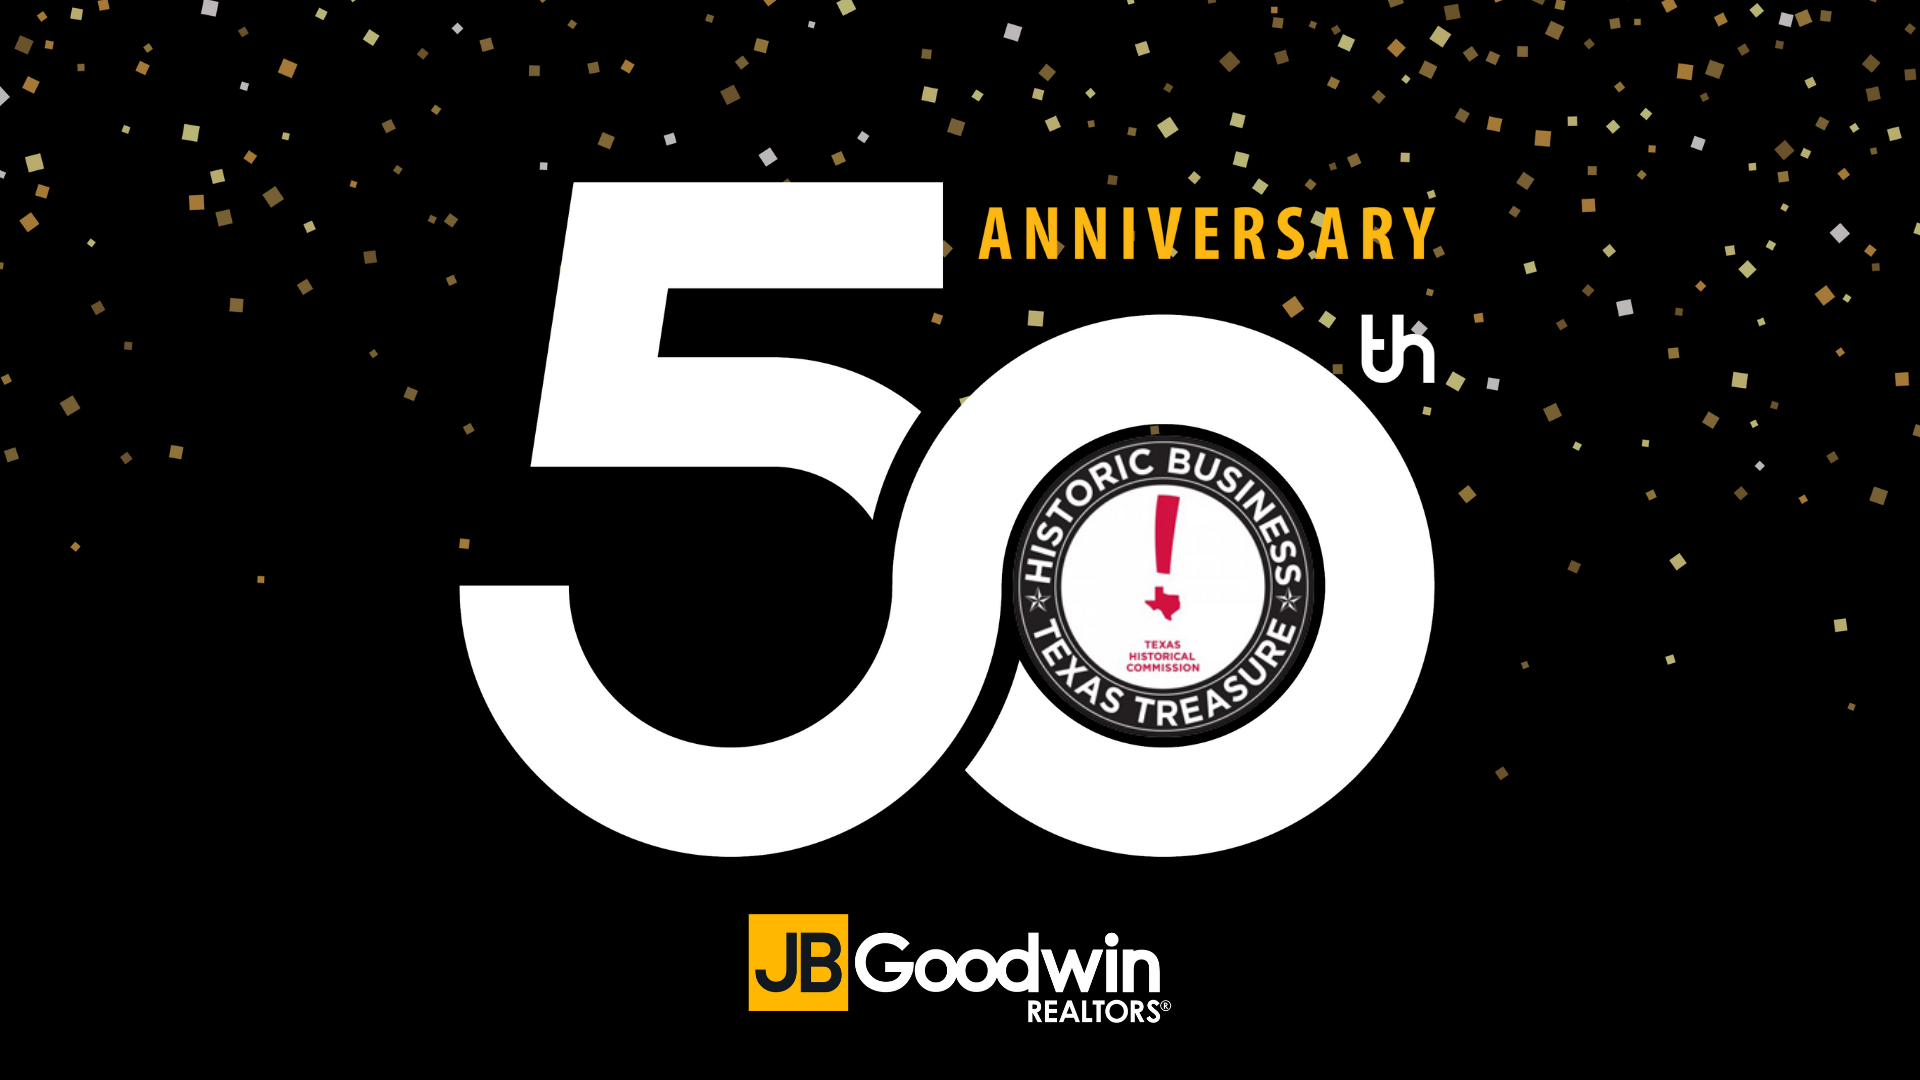 JBGoodwin 50th Anniversary Blog Image/Header